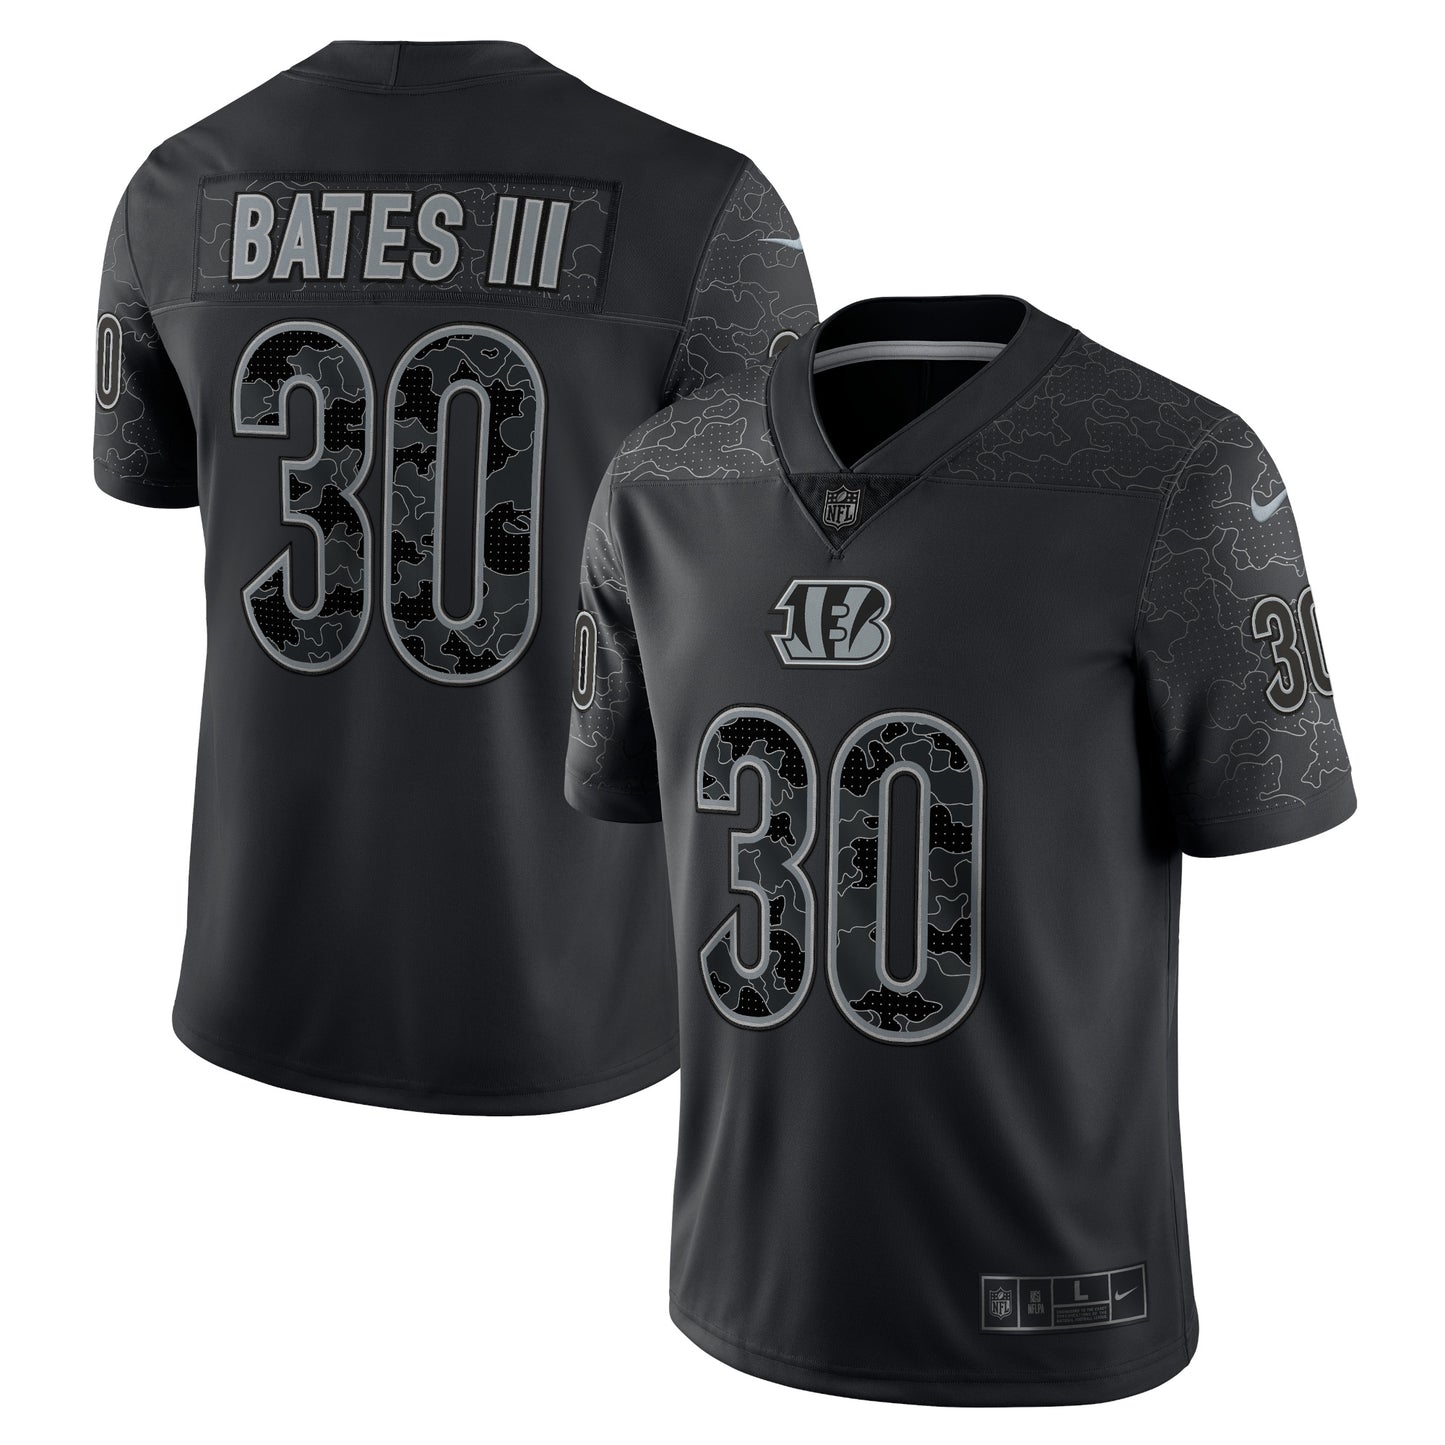 Jessie Bates III Cincinnati Bengals Nike RFLCTV Limited Jersey - Black